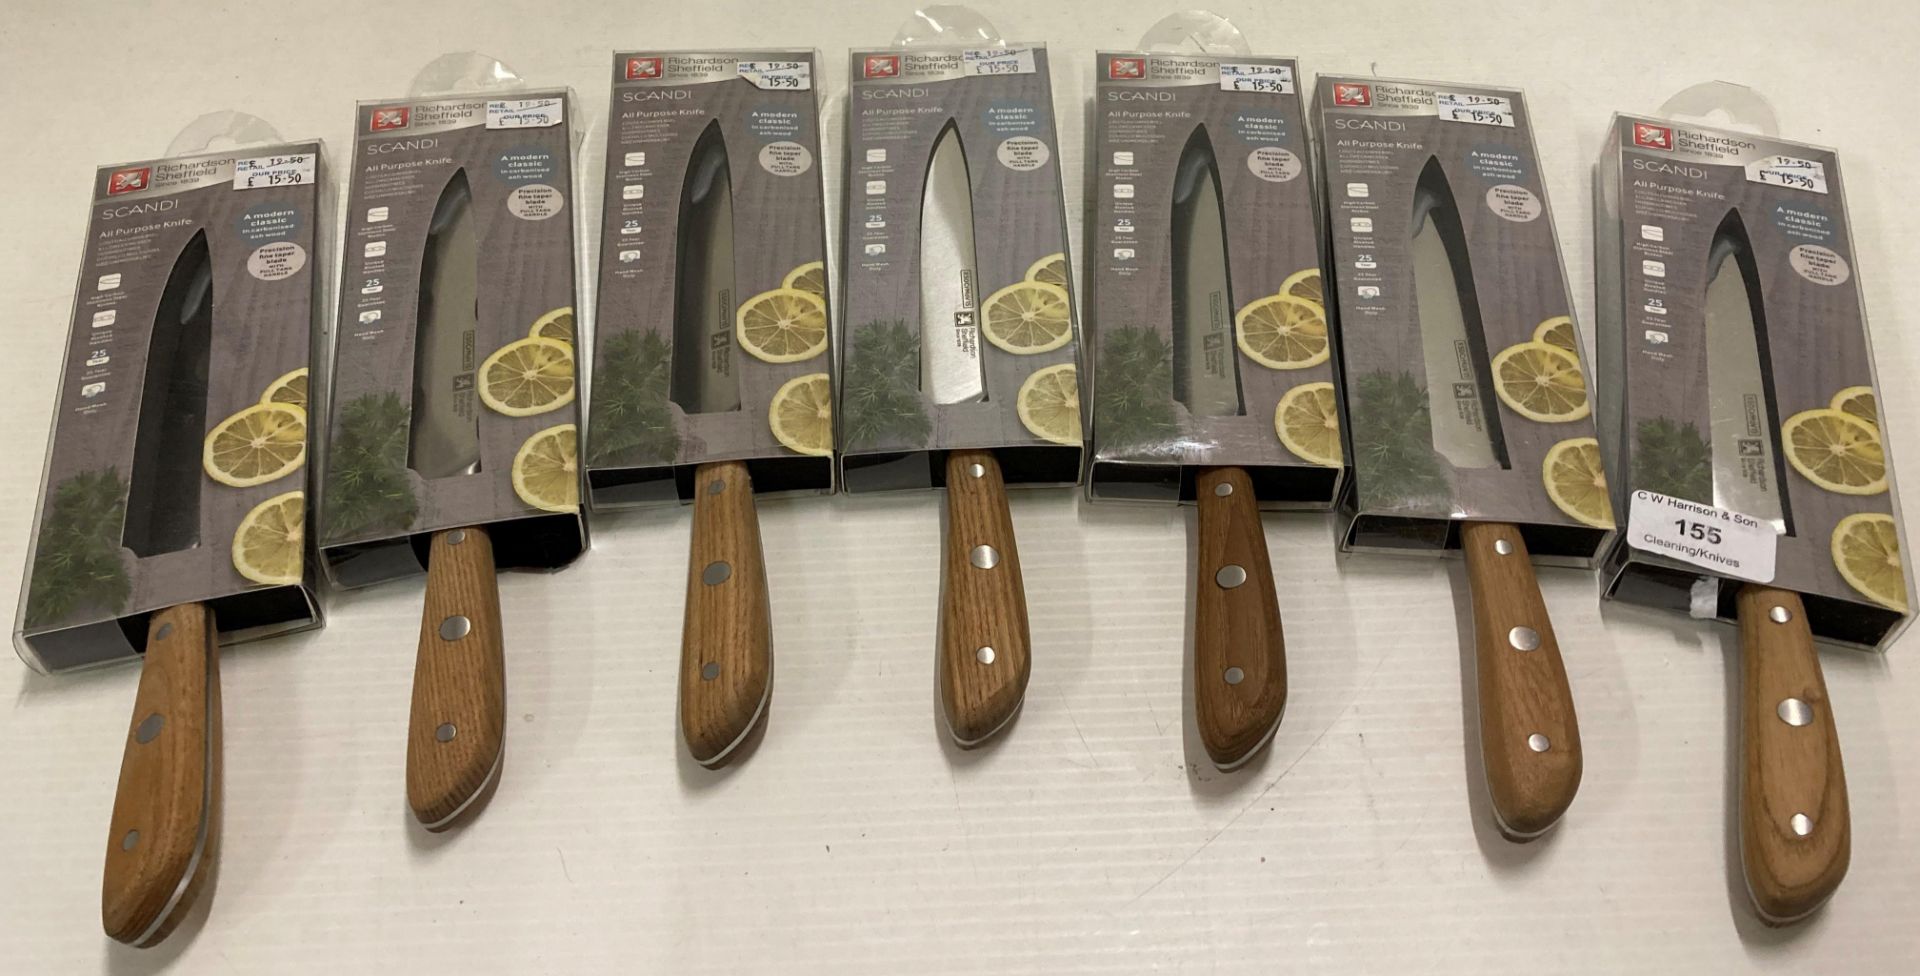 7 x Scandi all purpose knives (V13)